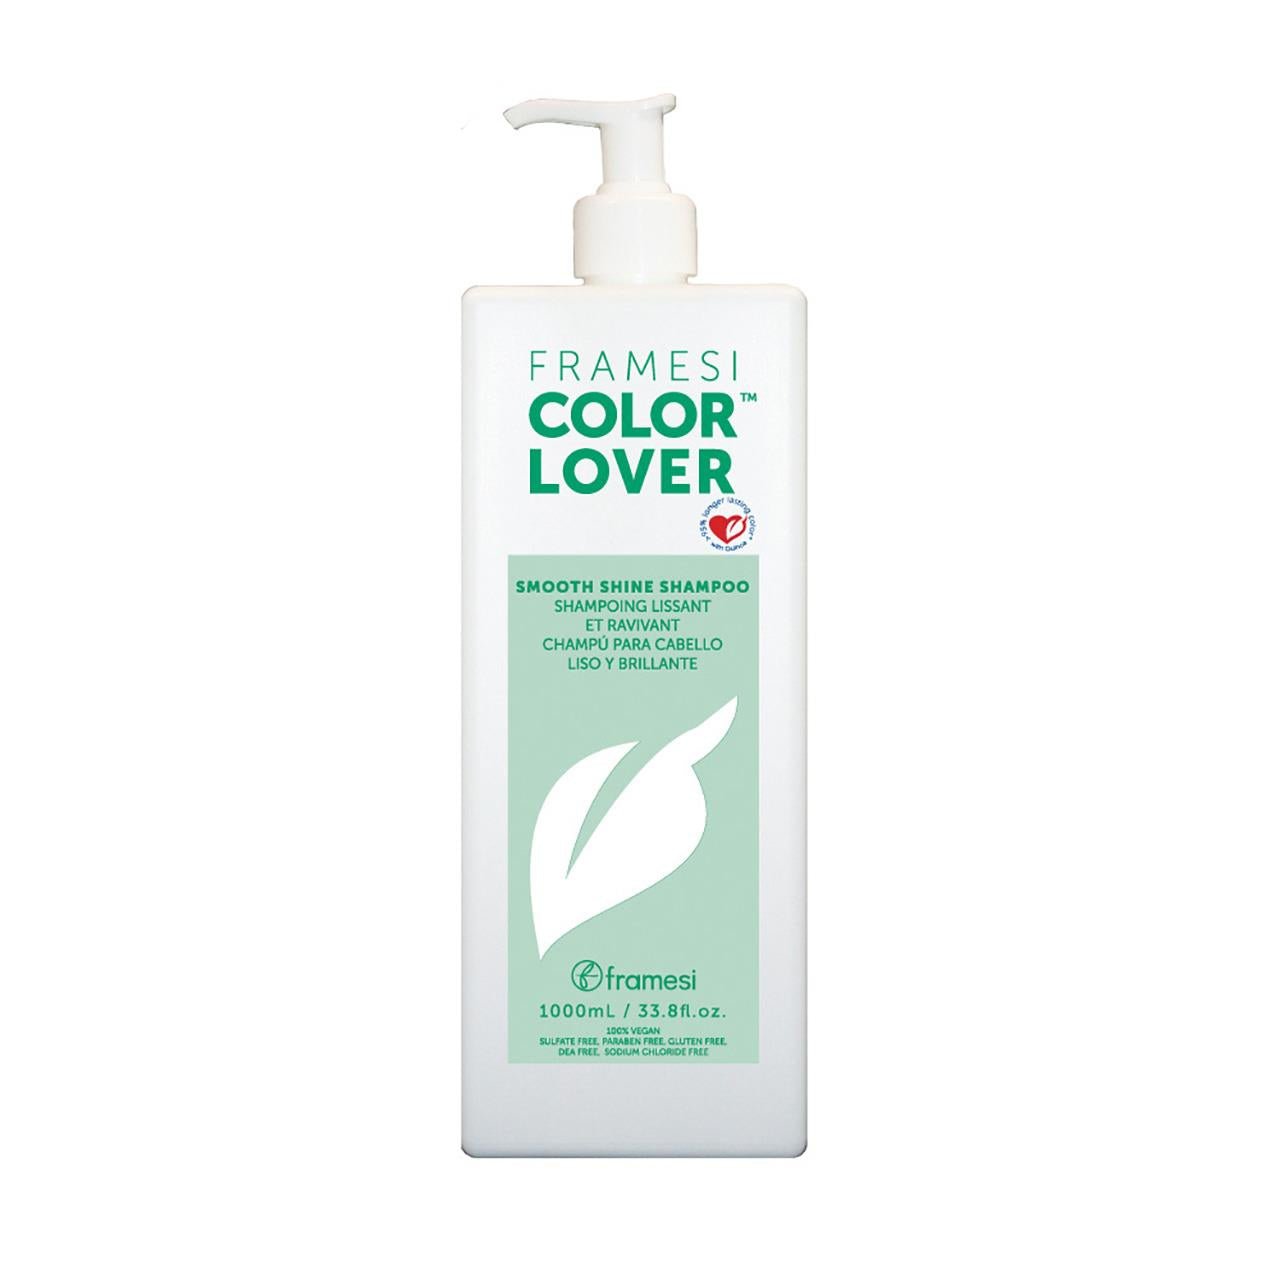 COLOR LOVER: Smooth Shine Shampoo Liter